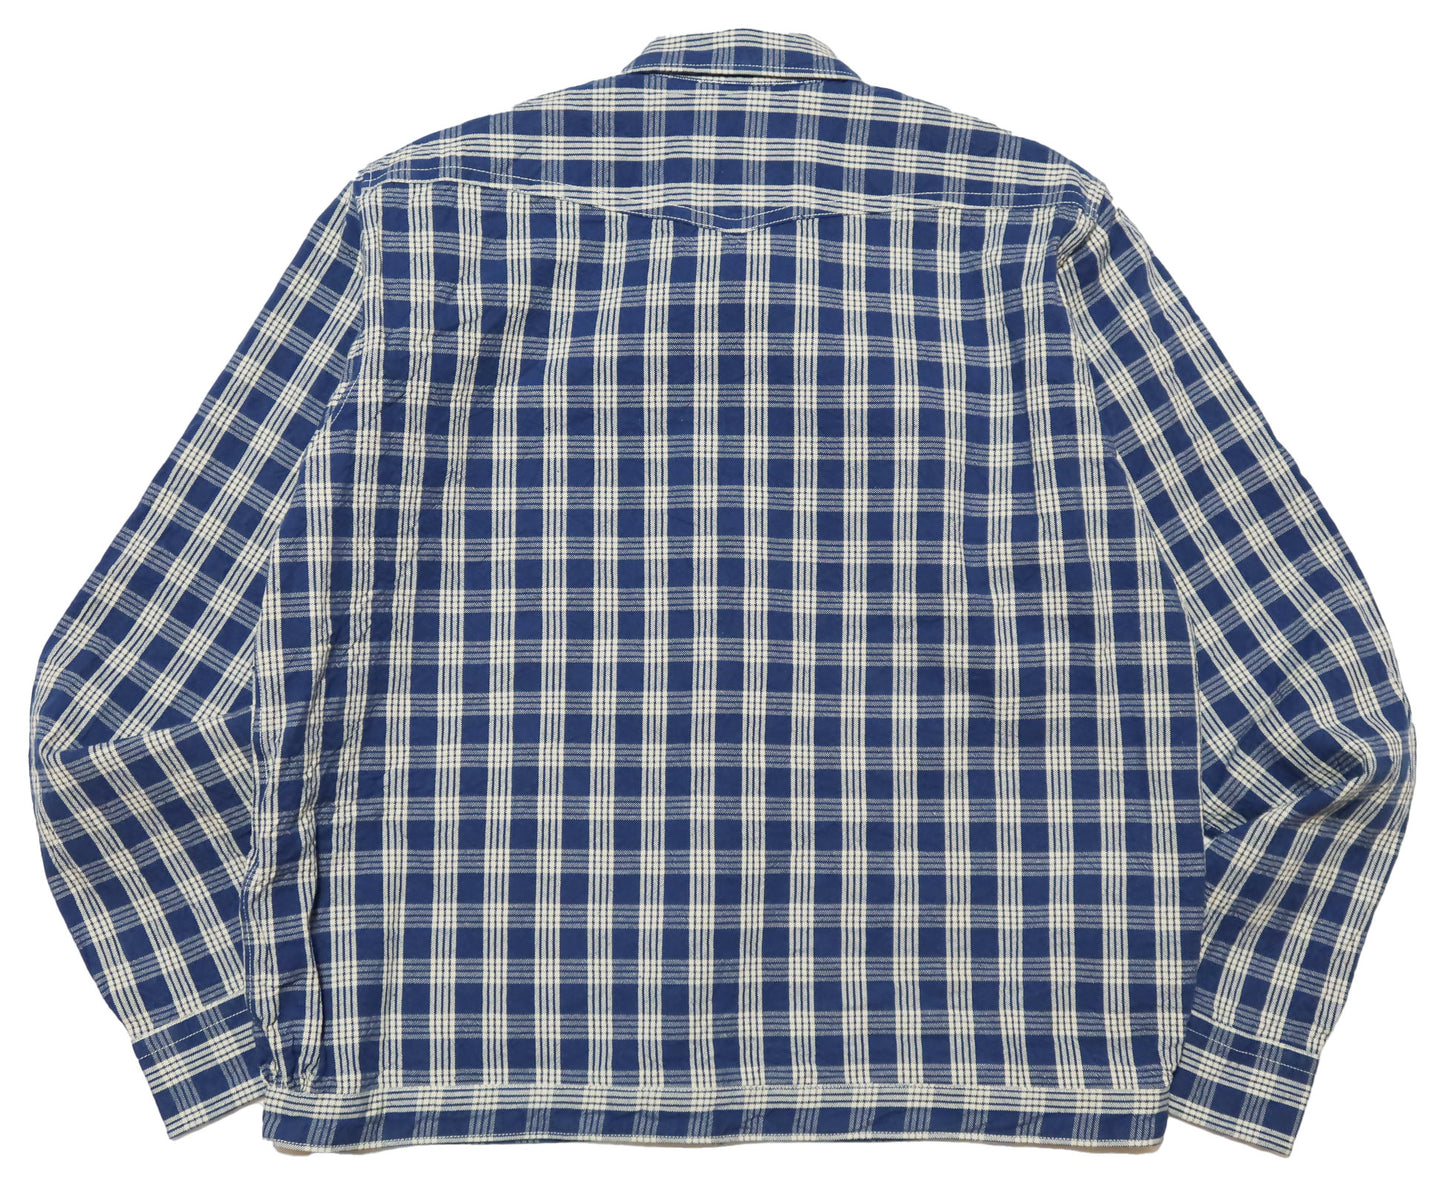 UNION SUPPLY Paraka Check Shirt Blouse US13487 Shirt Jacket